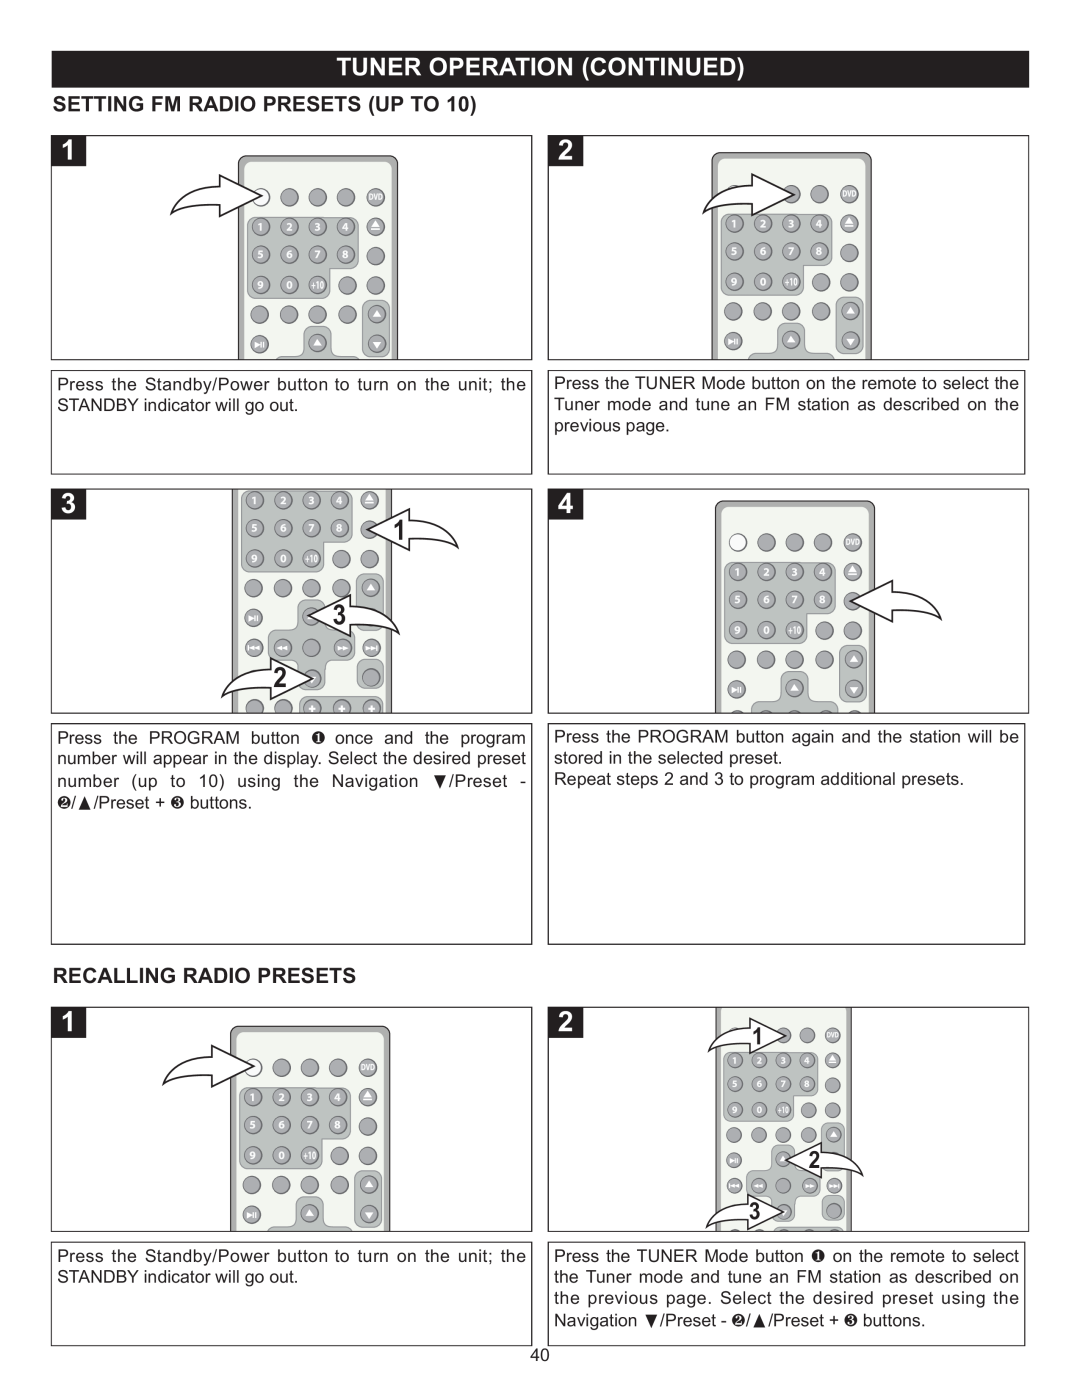 Memorex MIHT5005 manual 1 23, Setting Fm Radio Presets Up To, Recalling Radio Presets 